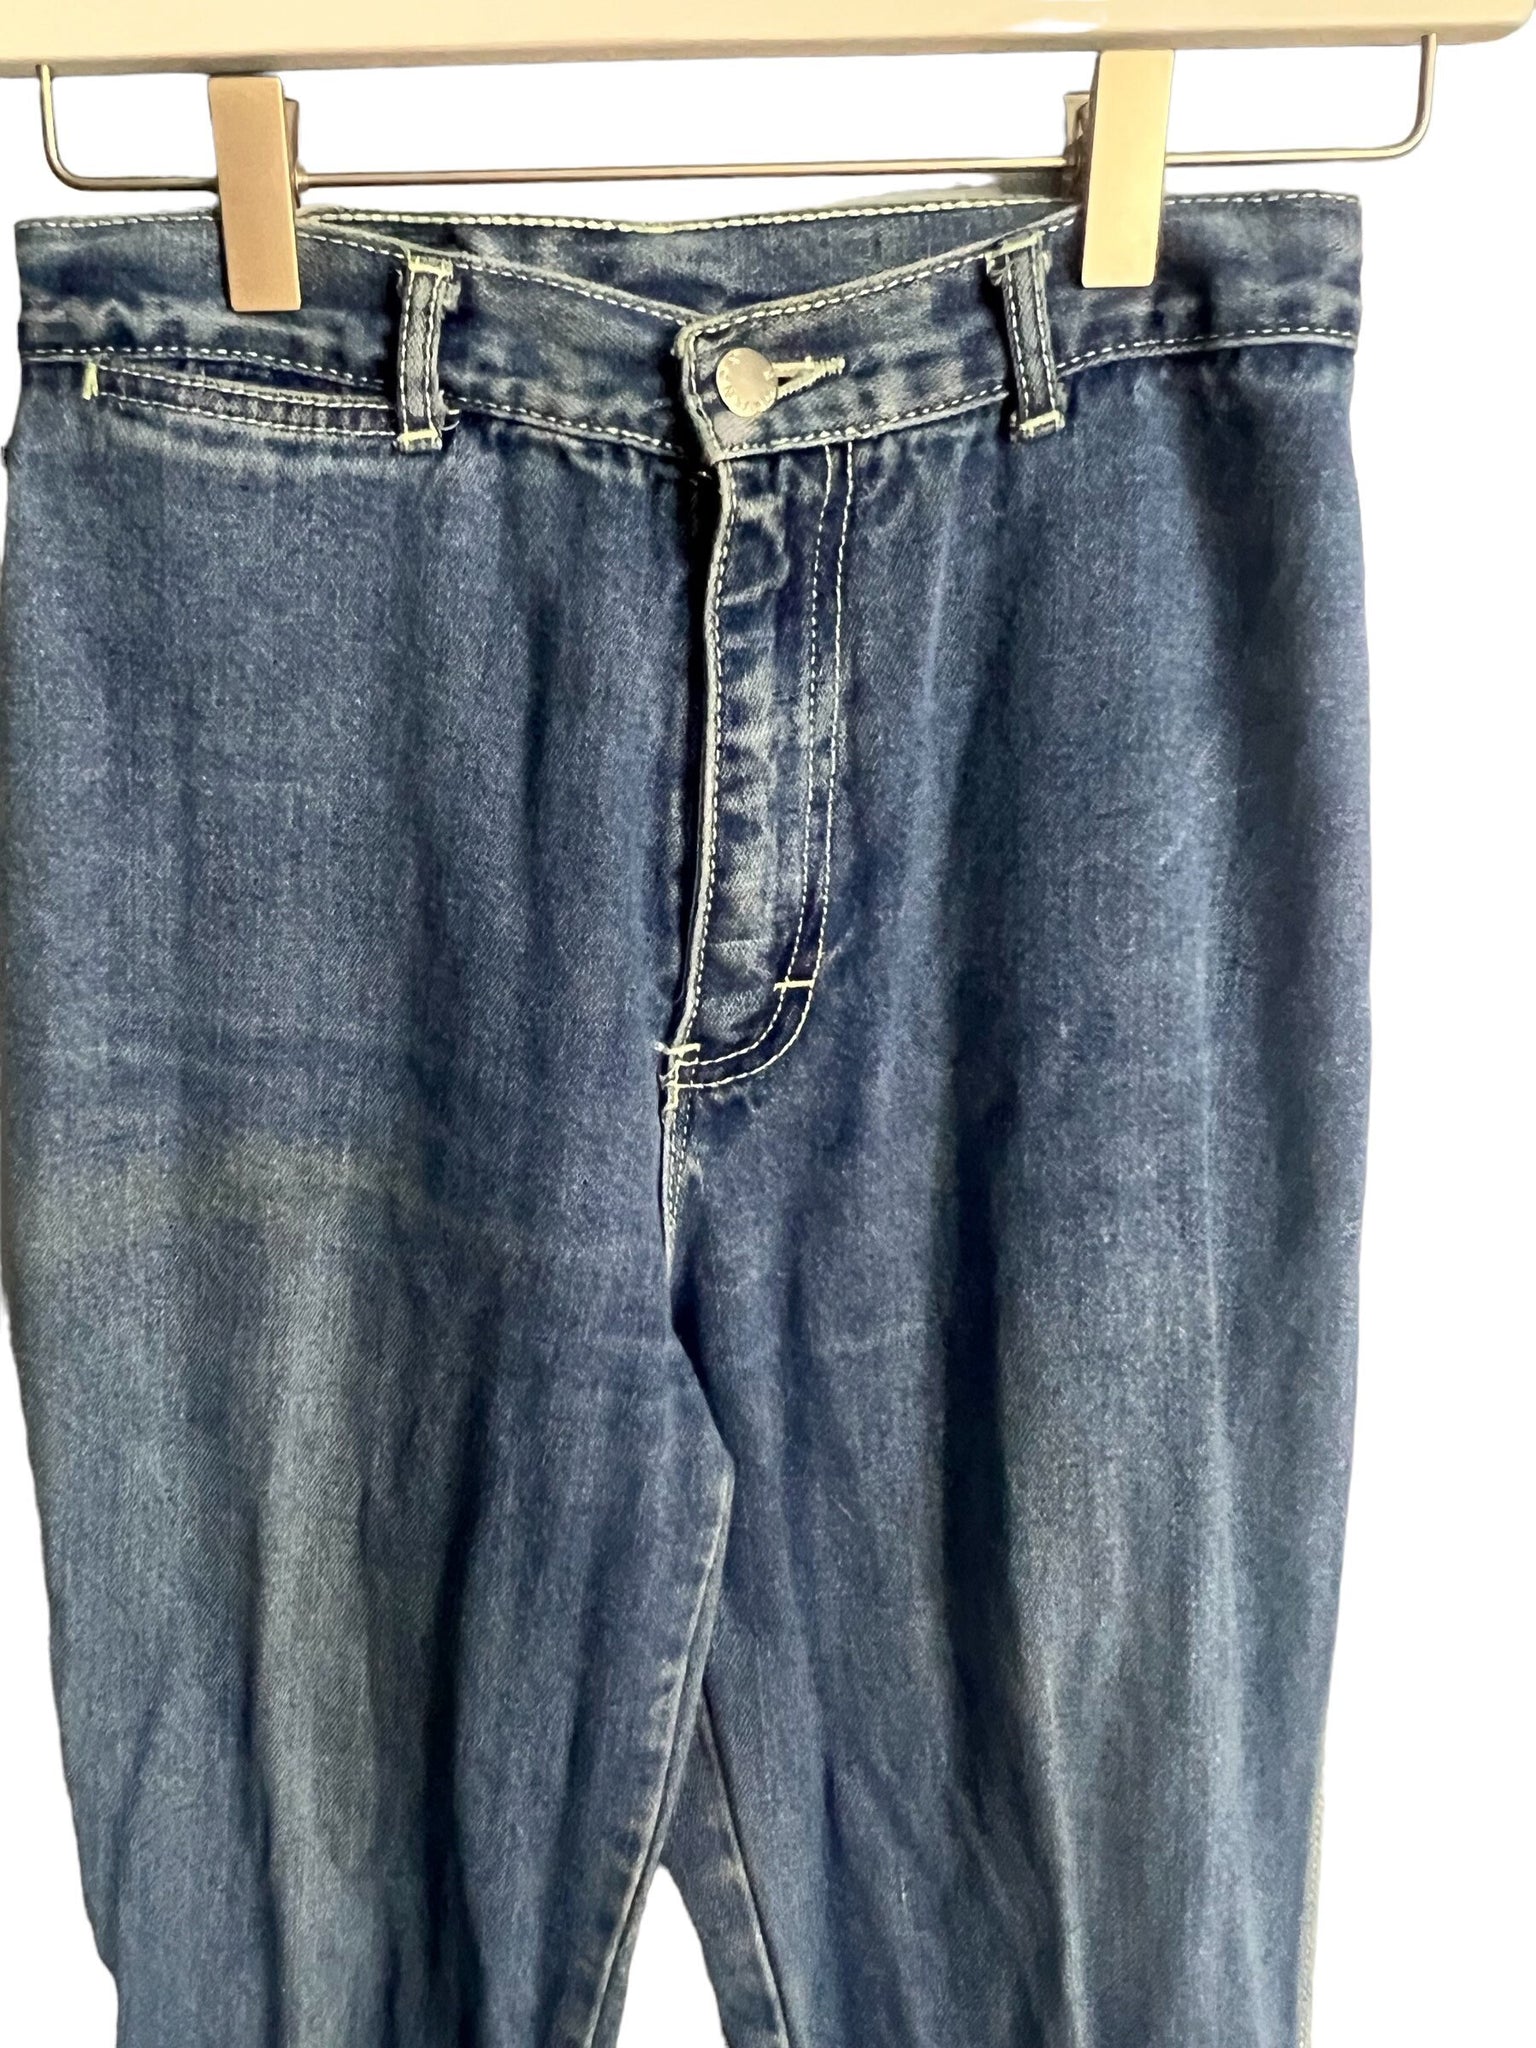 Vintage high waist Gitano jeans 7/8